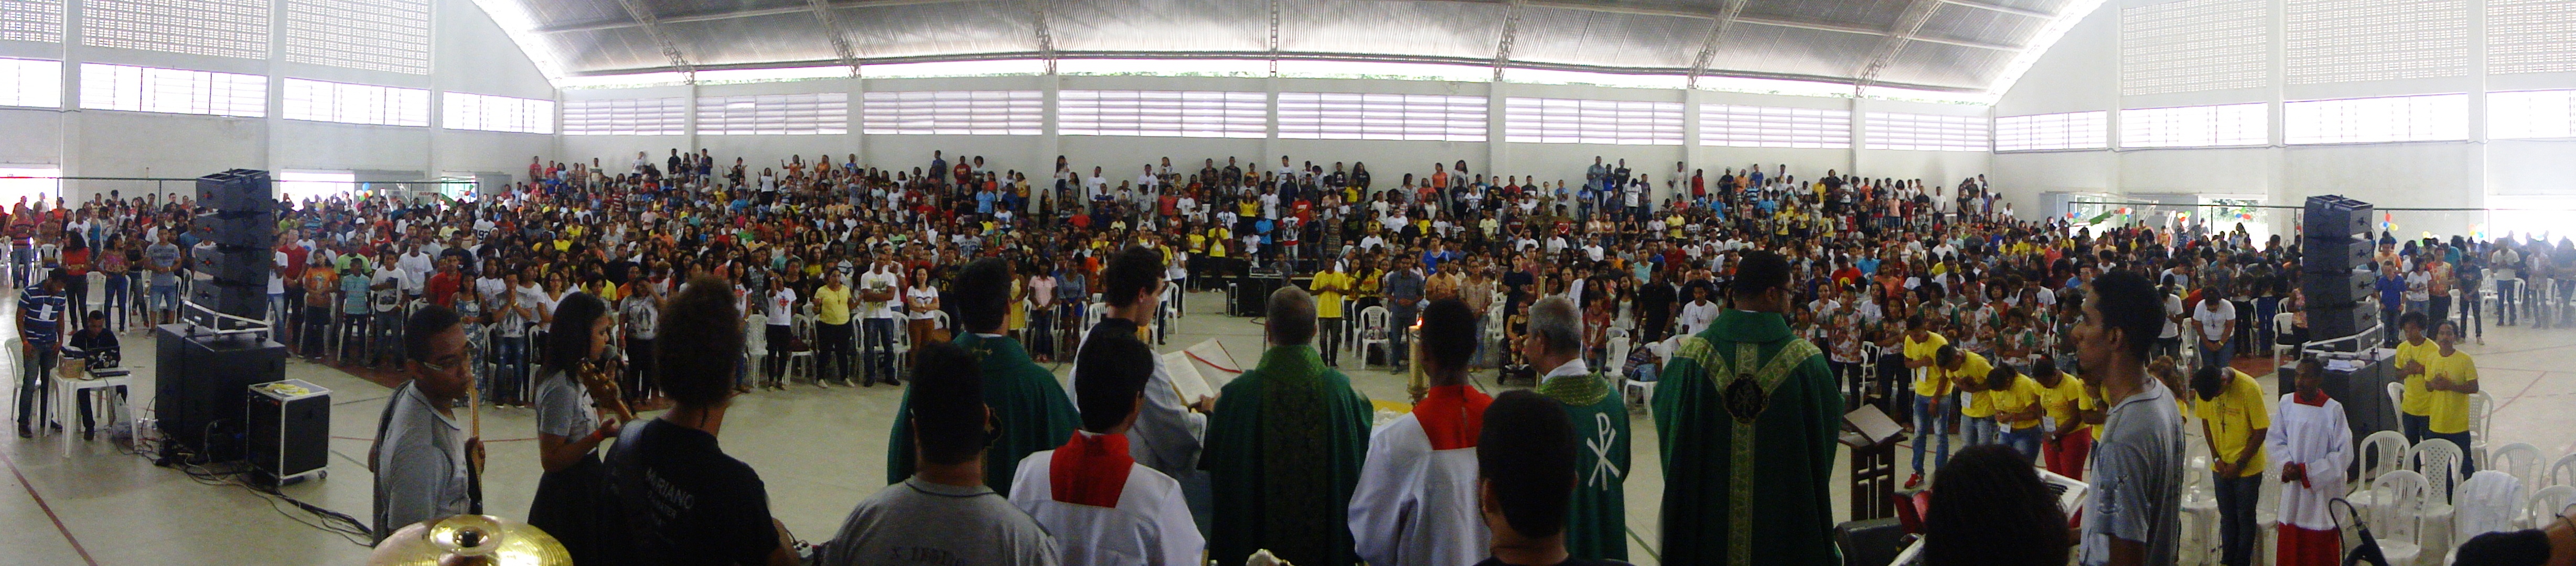 Fotos: Pascom Diocese de Camaçari